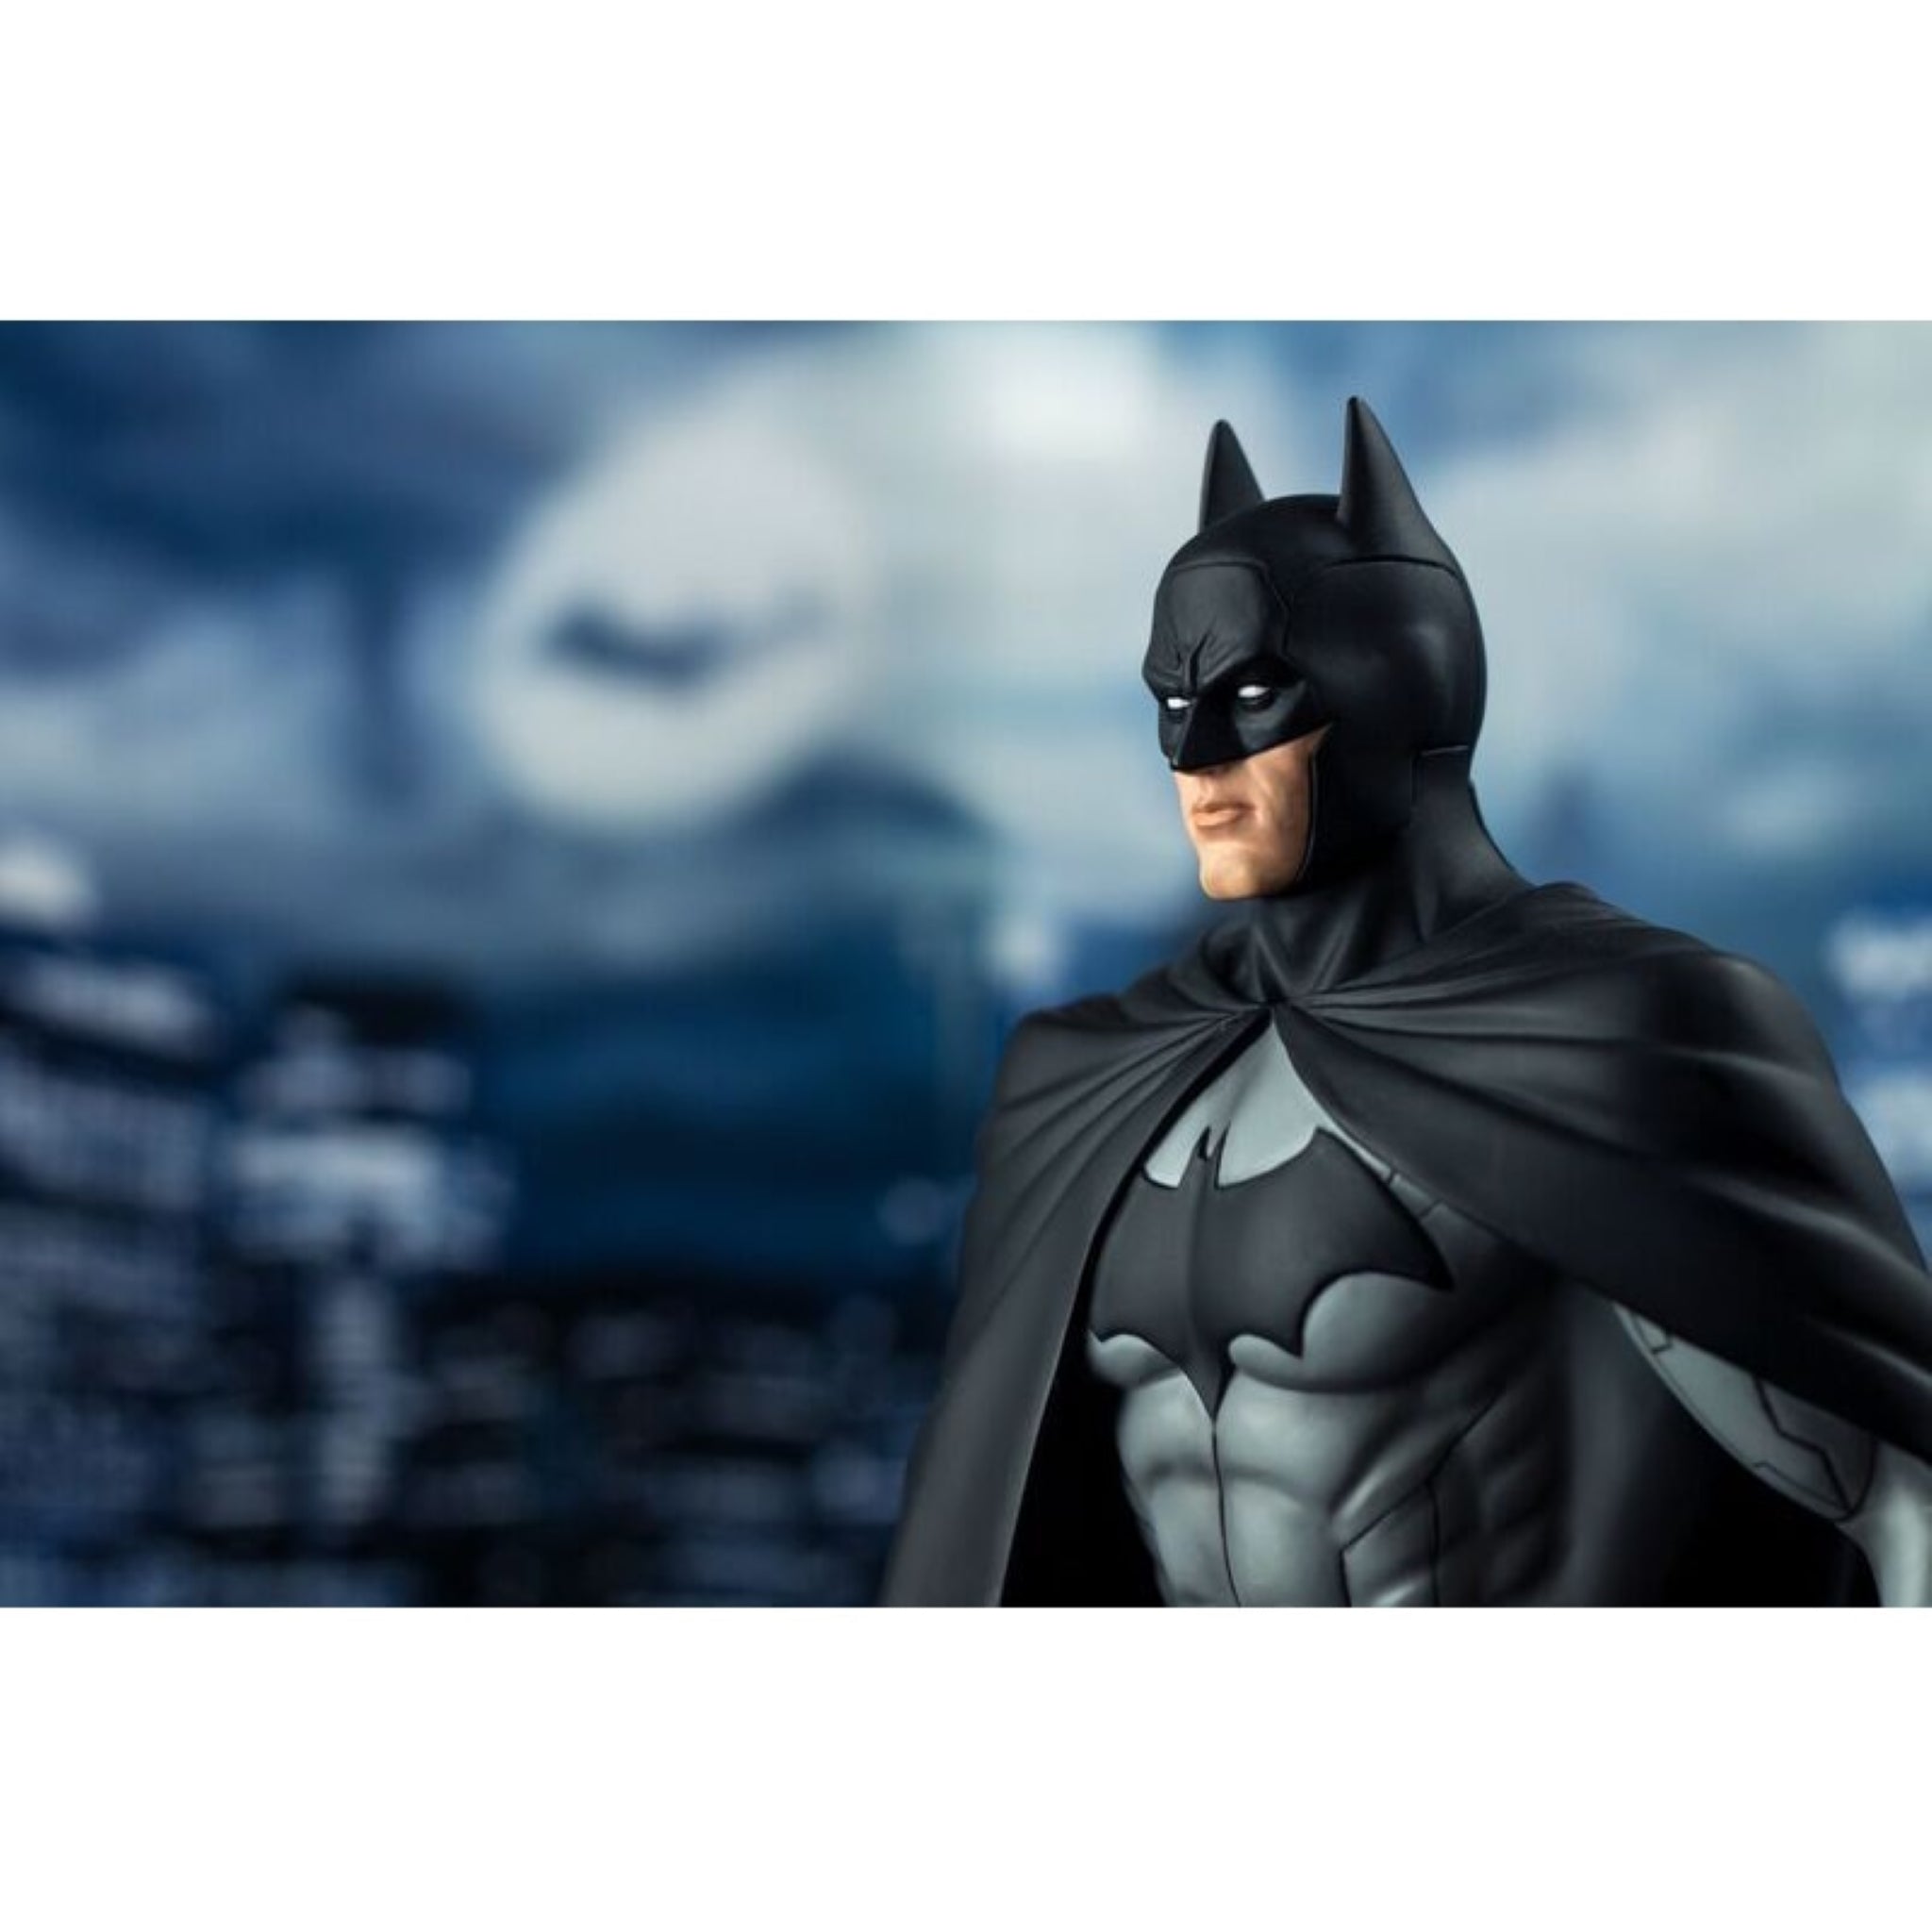 Ikon Collectables Batman The New 52 Batman Limited Edition Statue